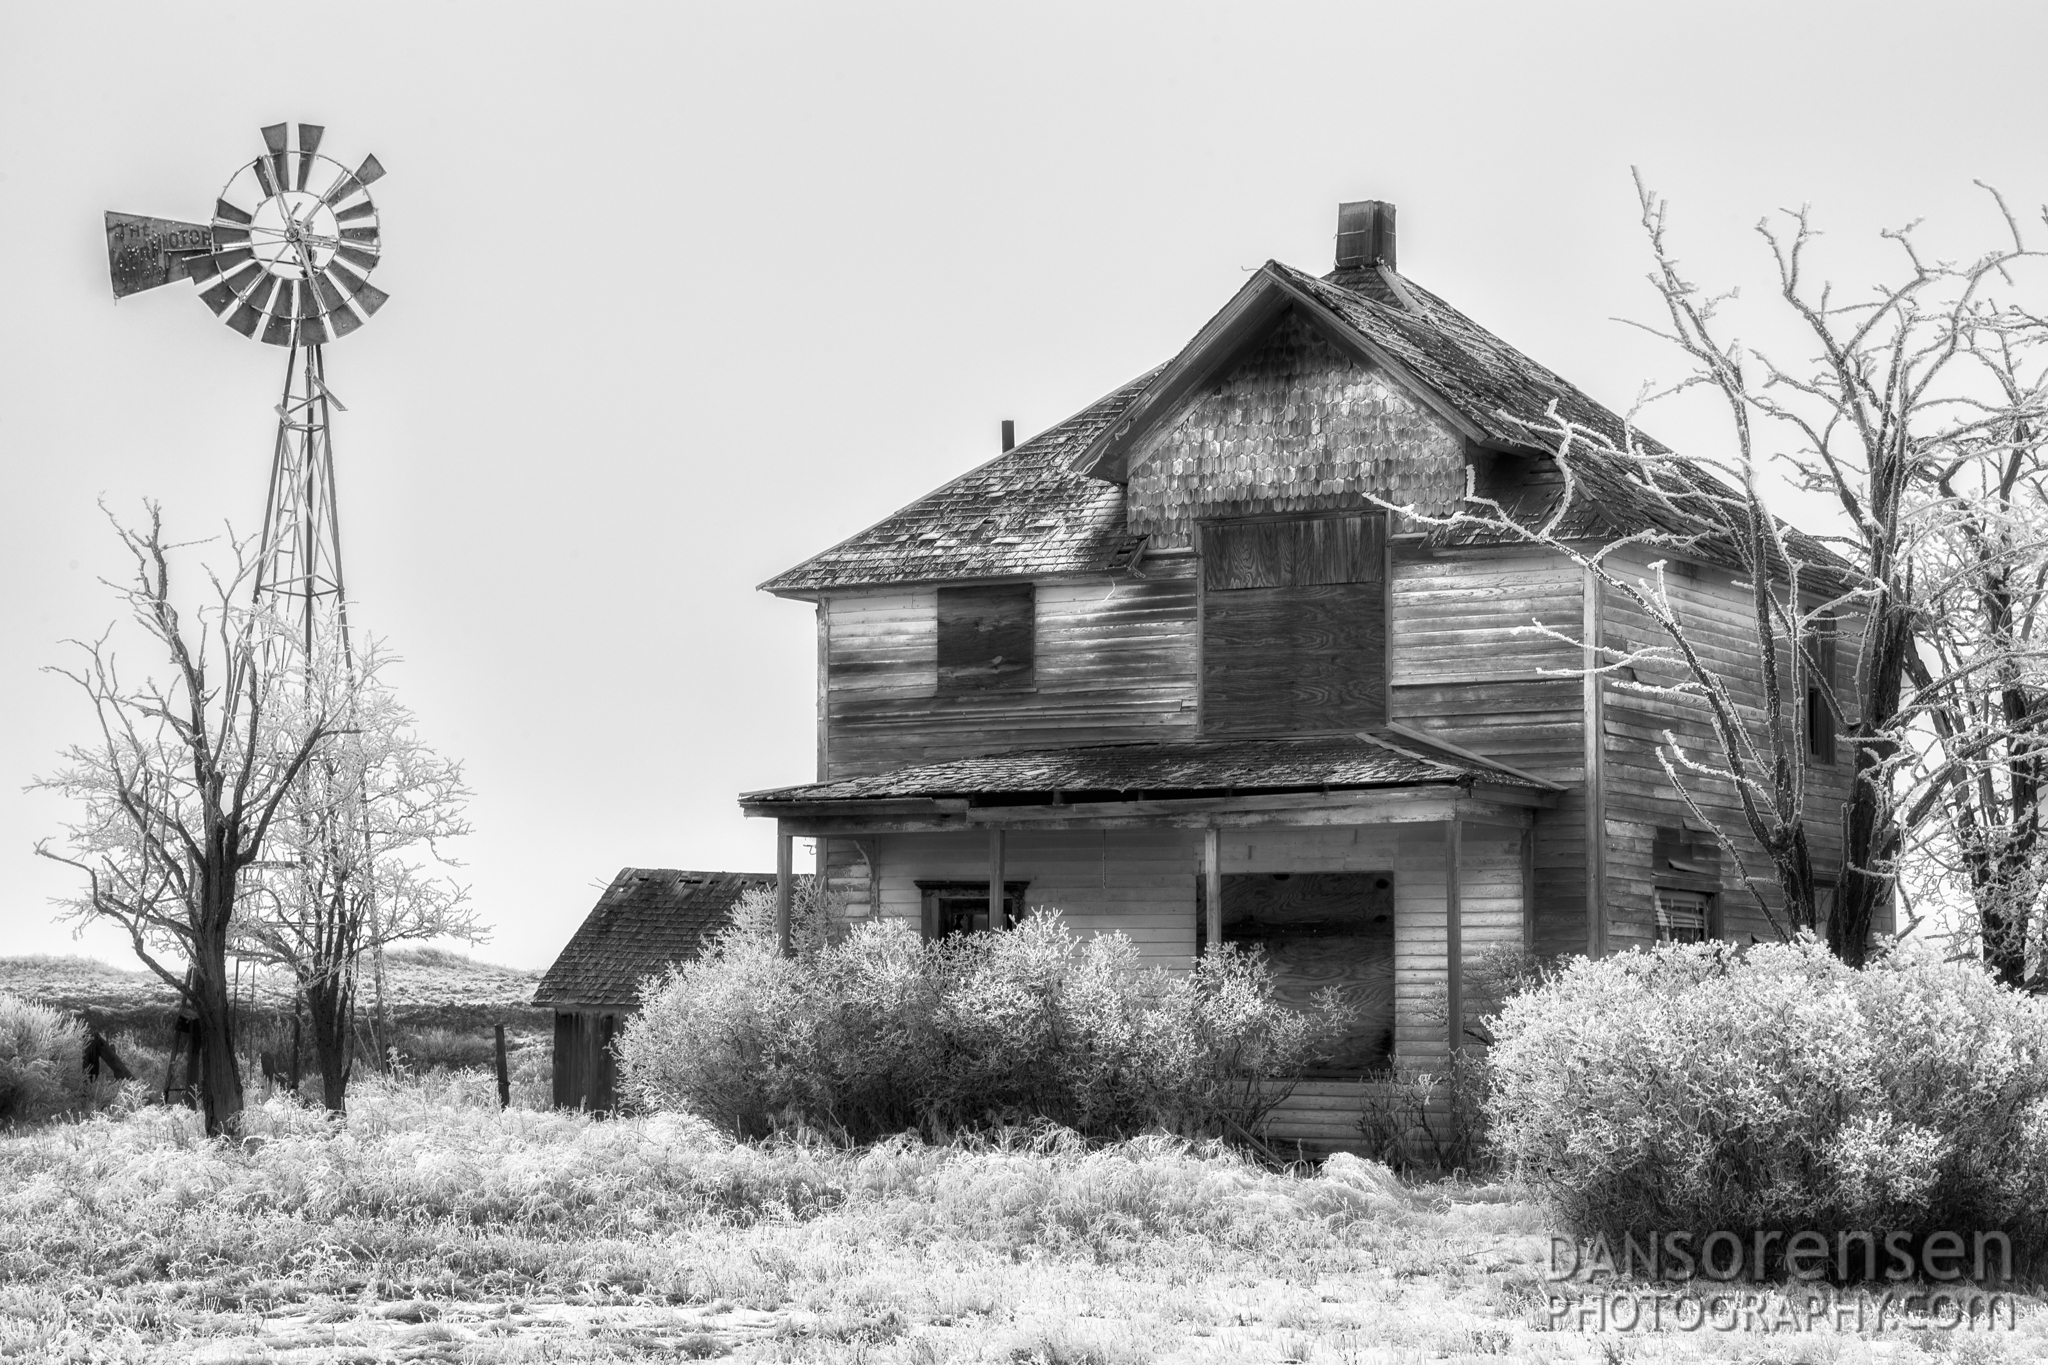 Abandoned house in the winter - Dan Sorensen Photography